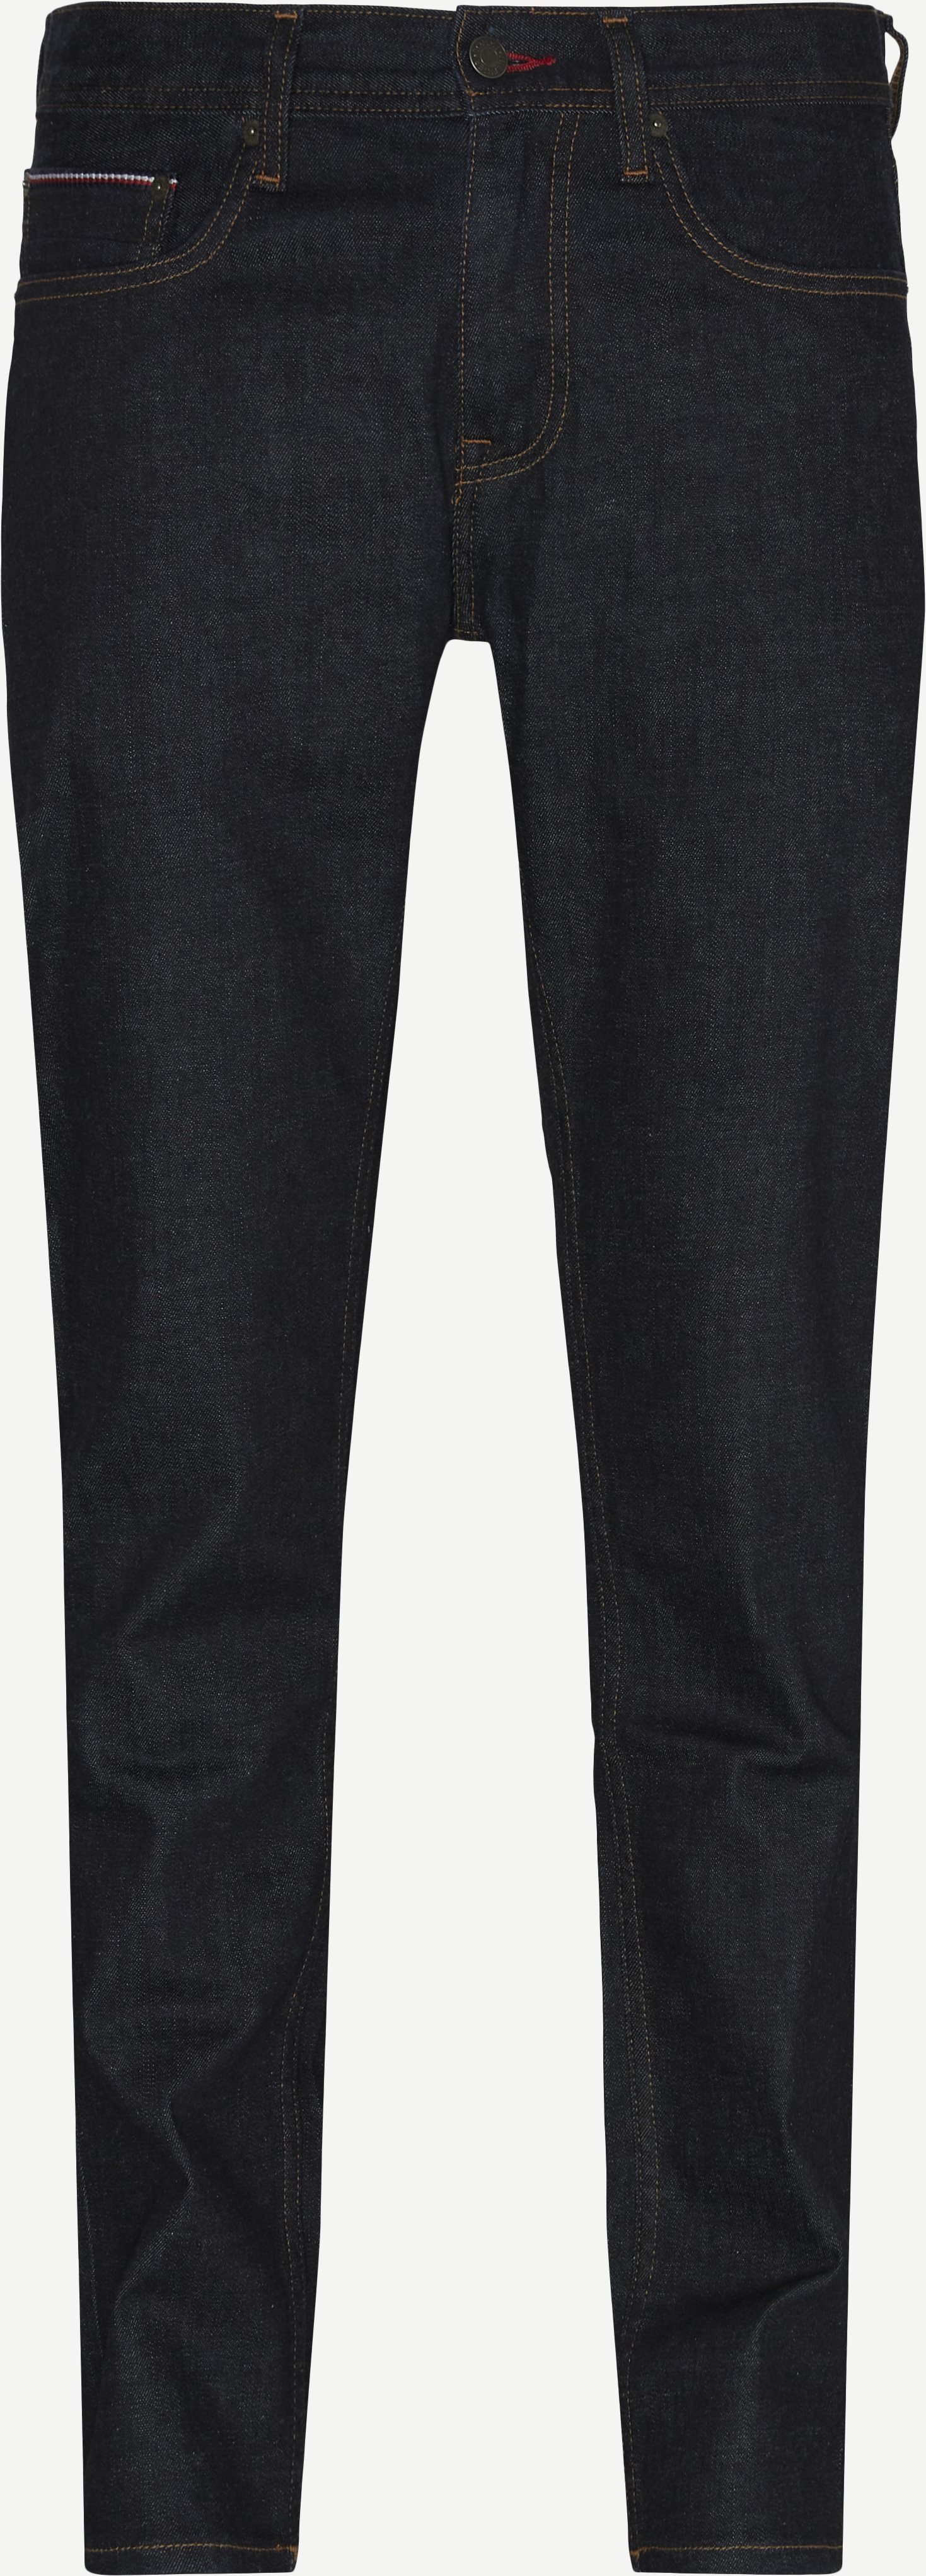 15578 Denton Ohio Jeans - Jeans - Straight fit - Denim